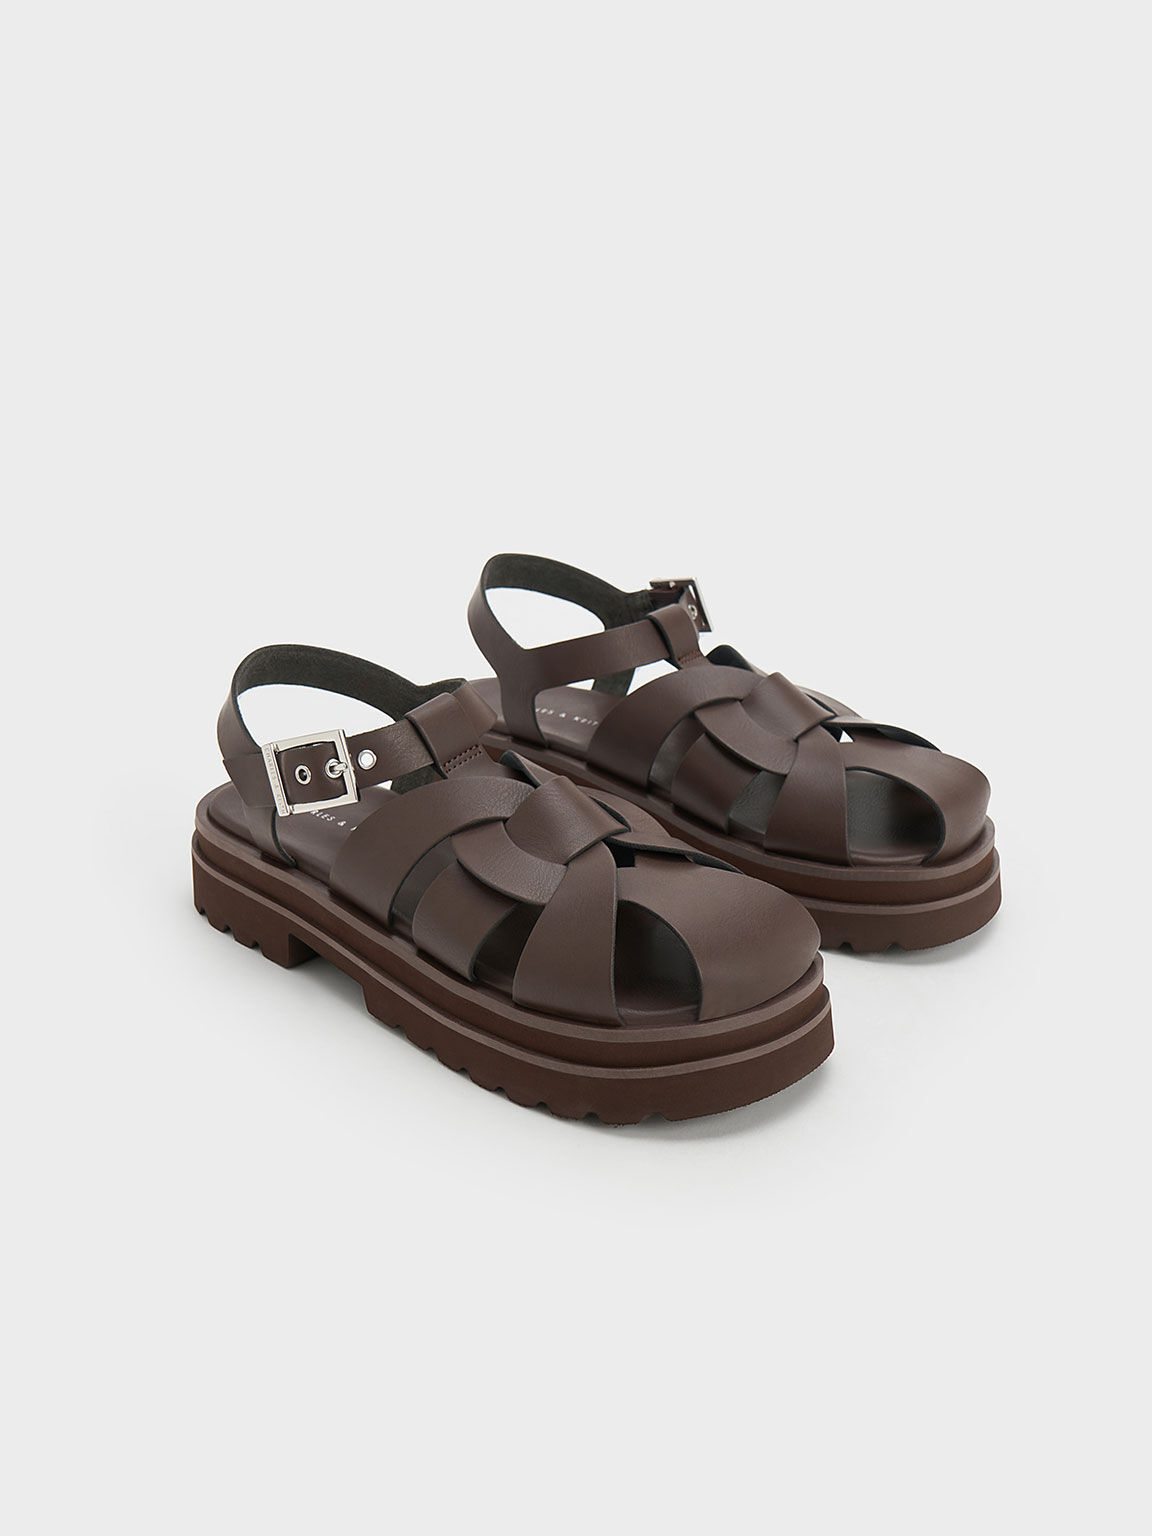 Buy Tan Flat Sandals for Women by Dchica Online | Ajio.com